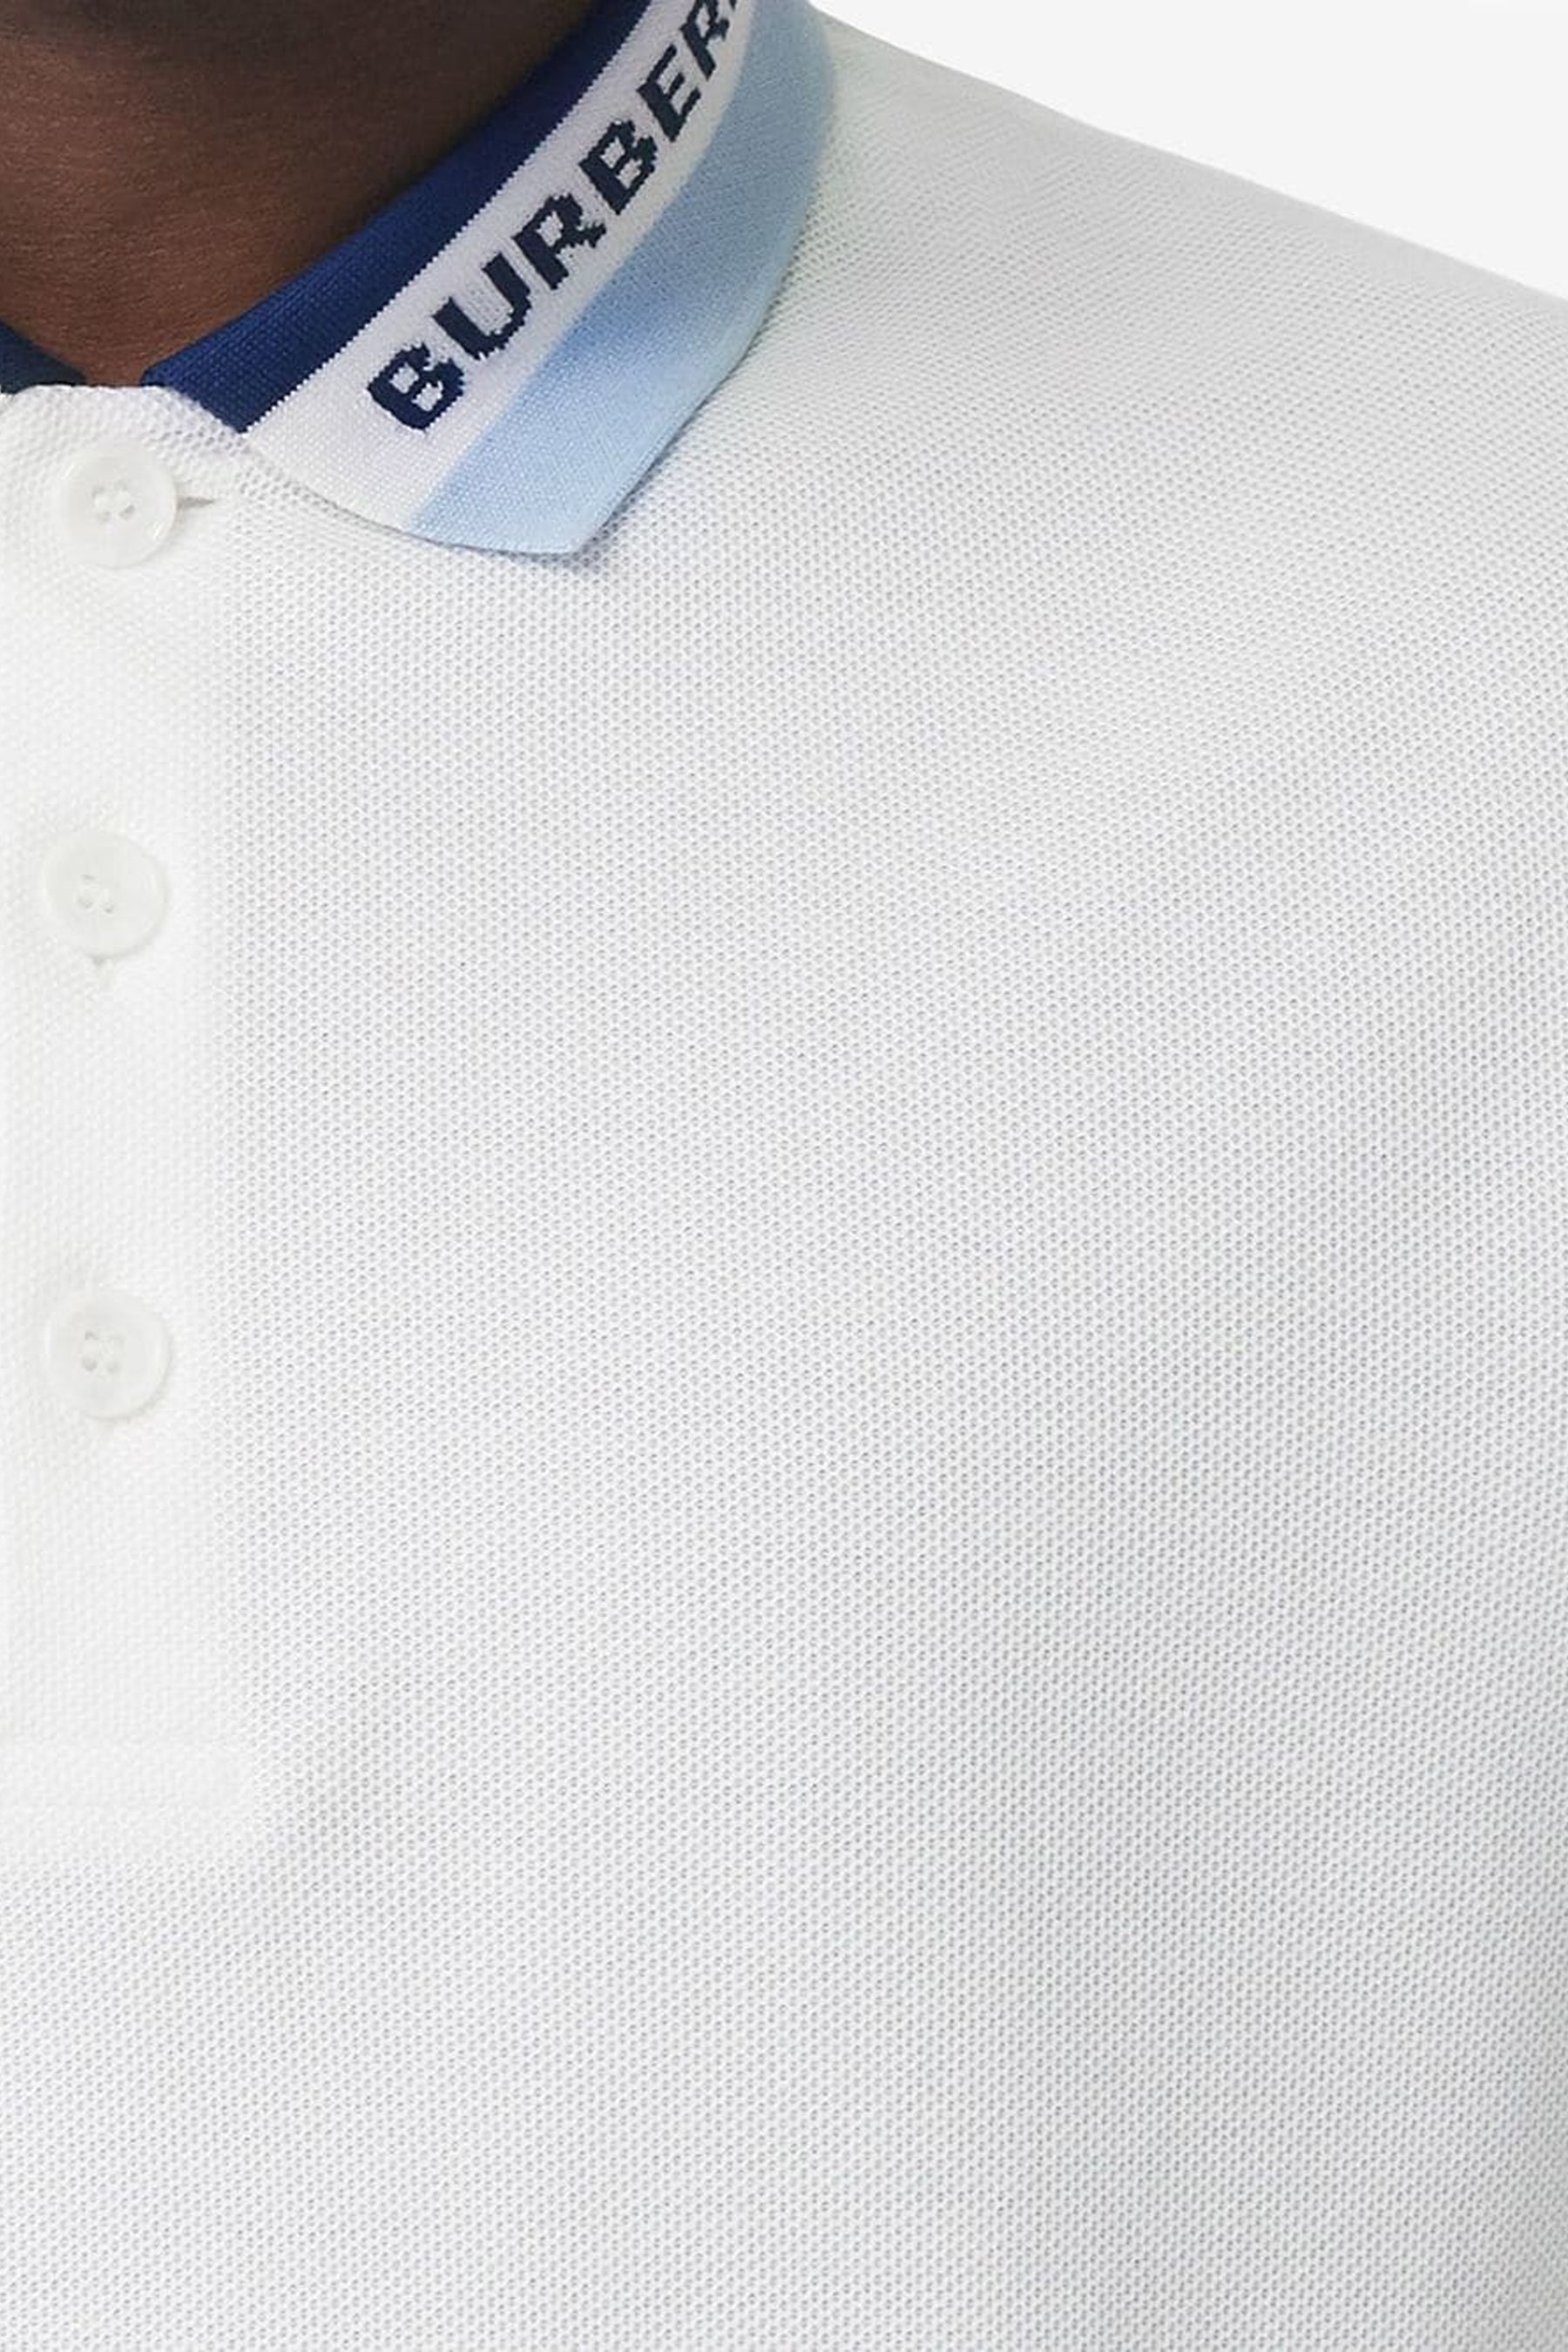 Burberry contrast-collar polo shirt